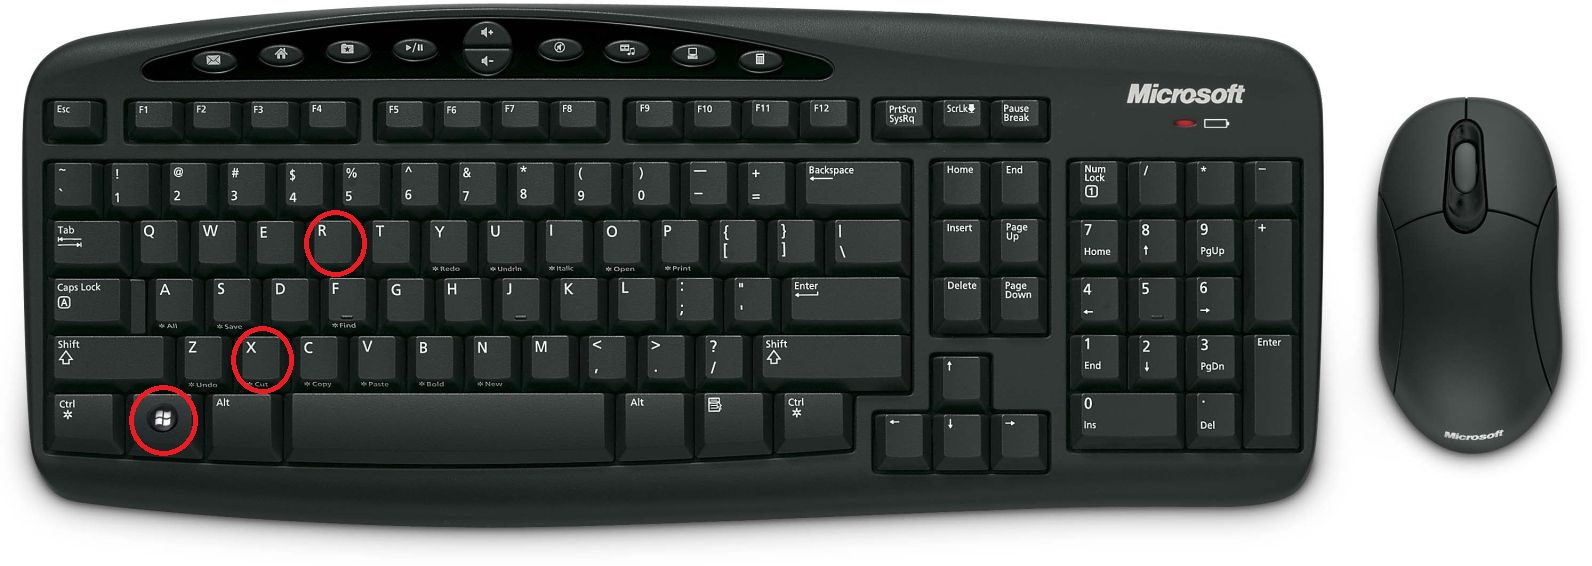 uforio keyboard shortcuts